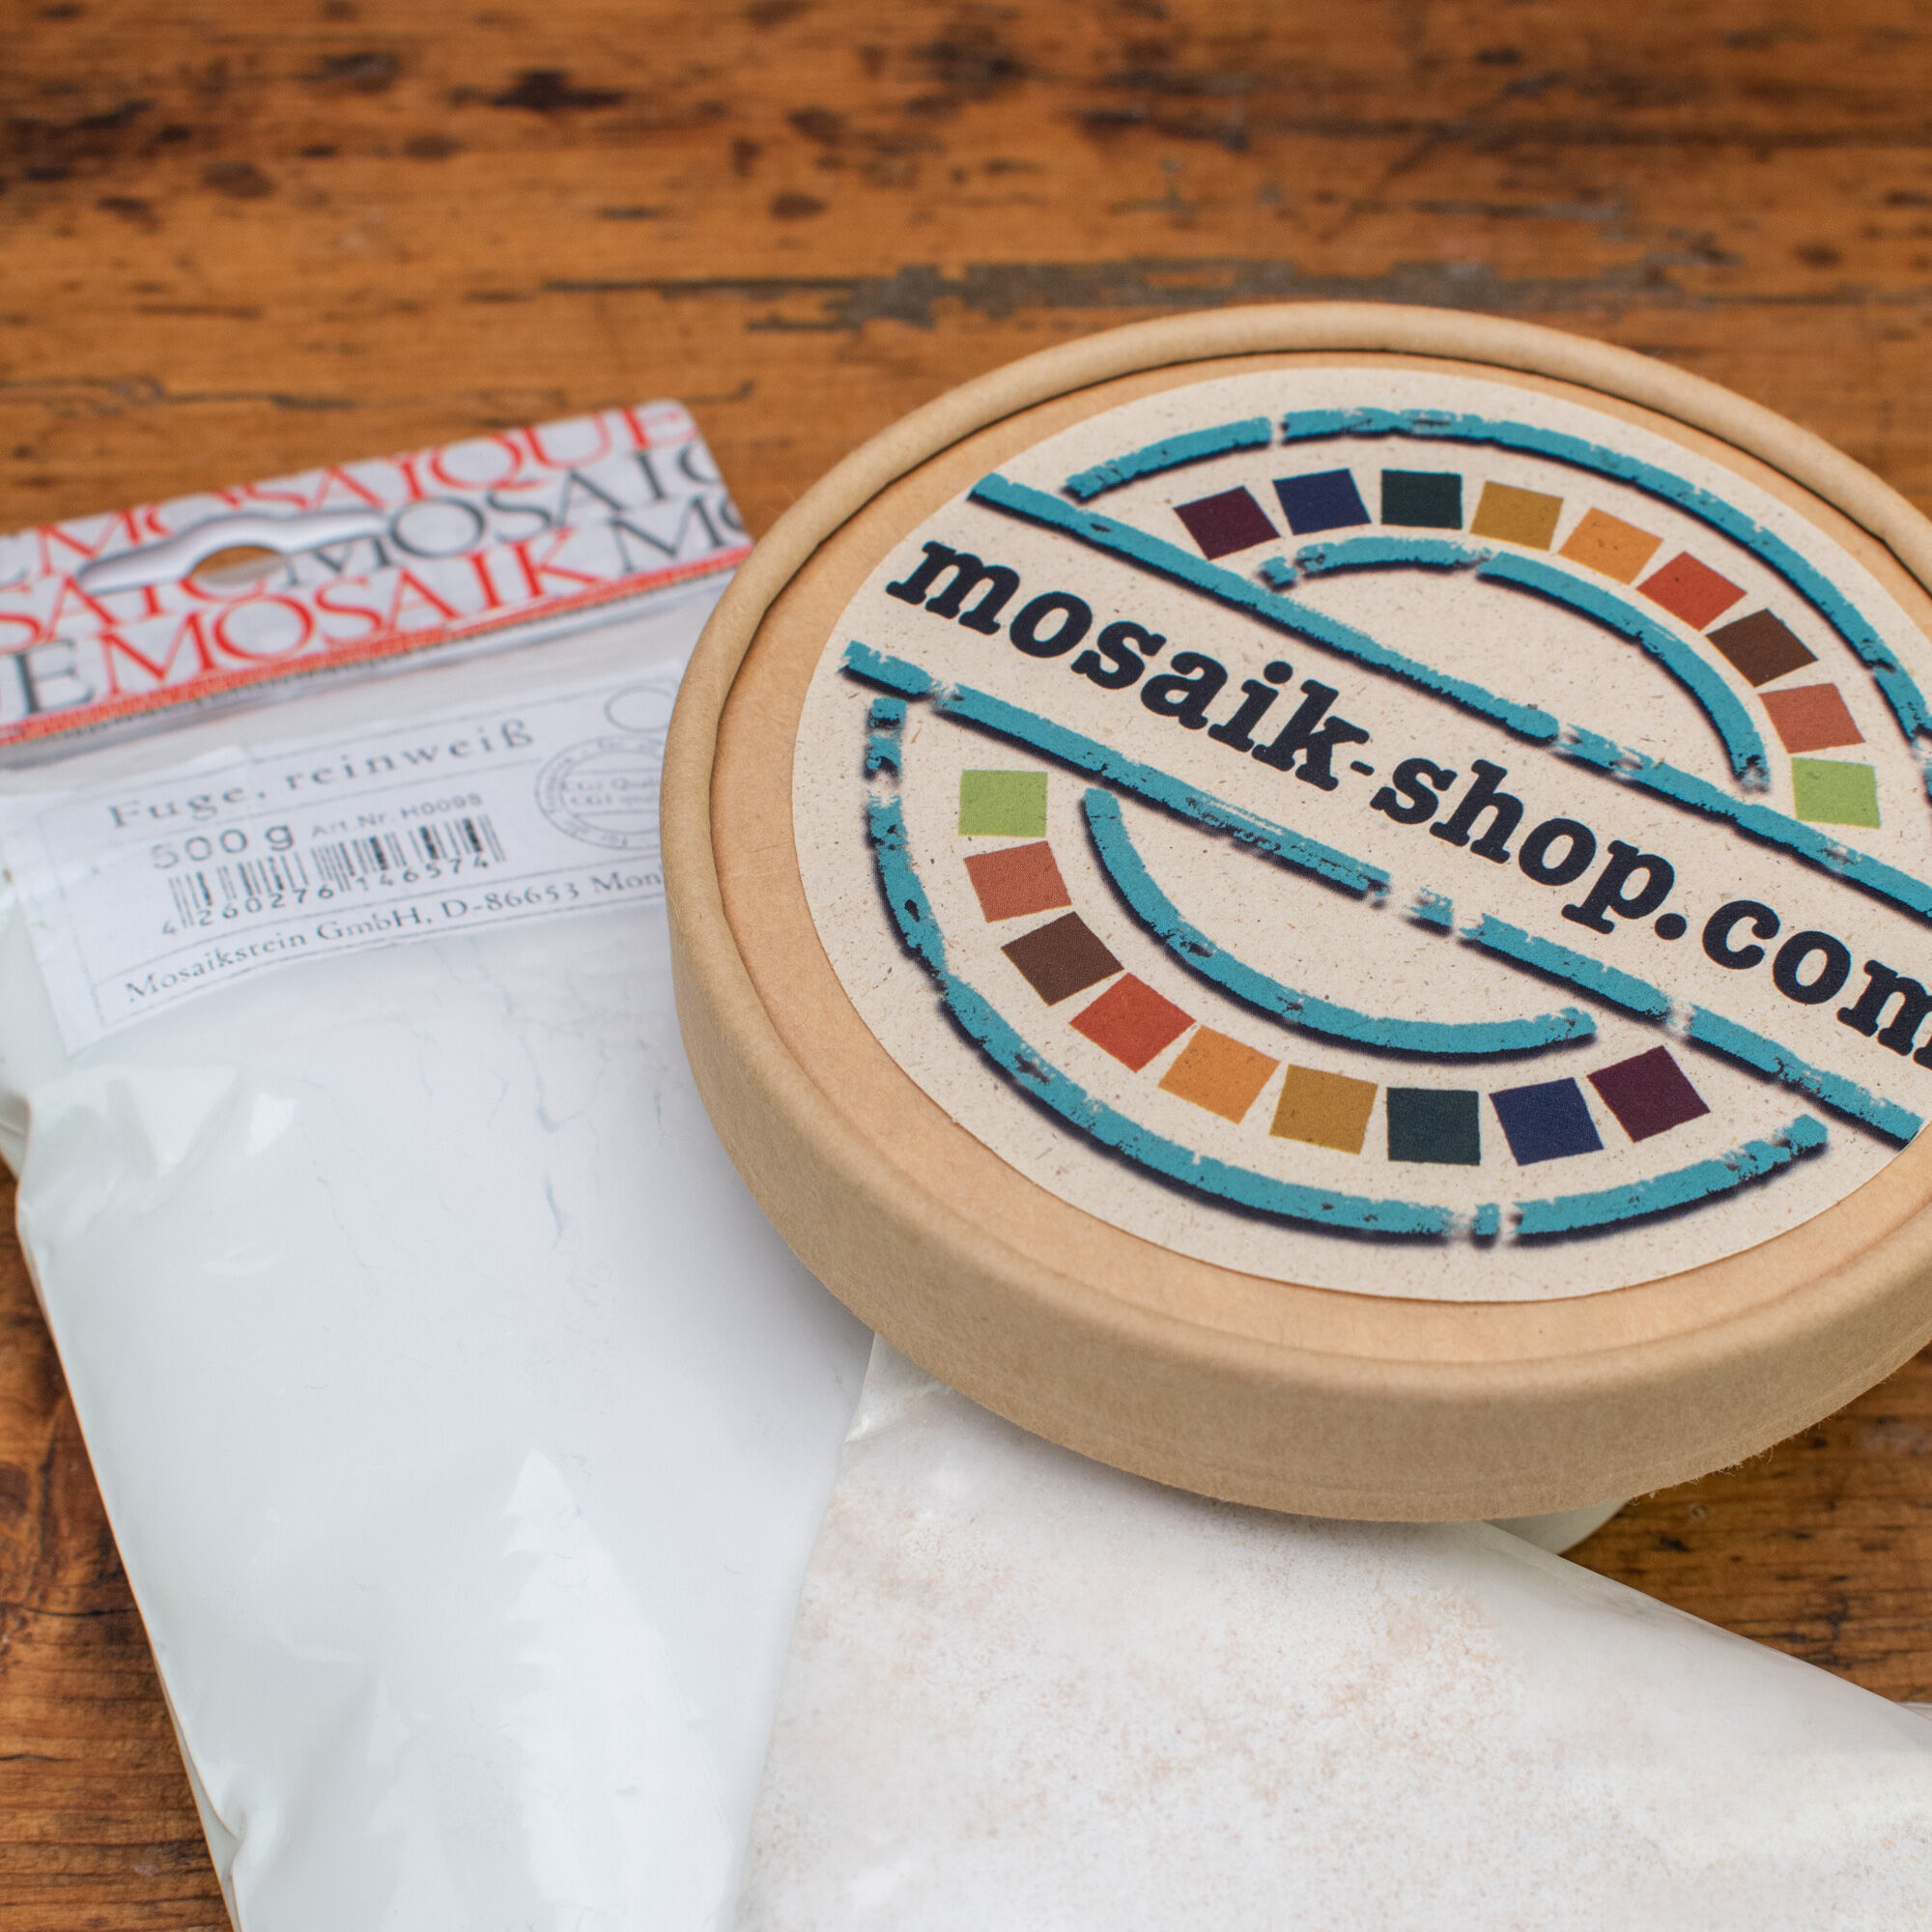 Buy Mosaic grout powder